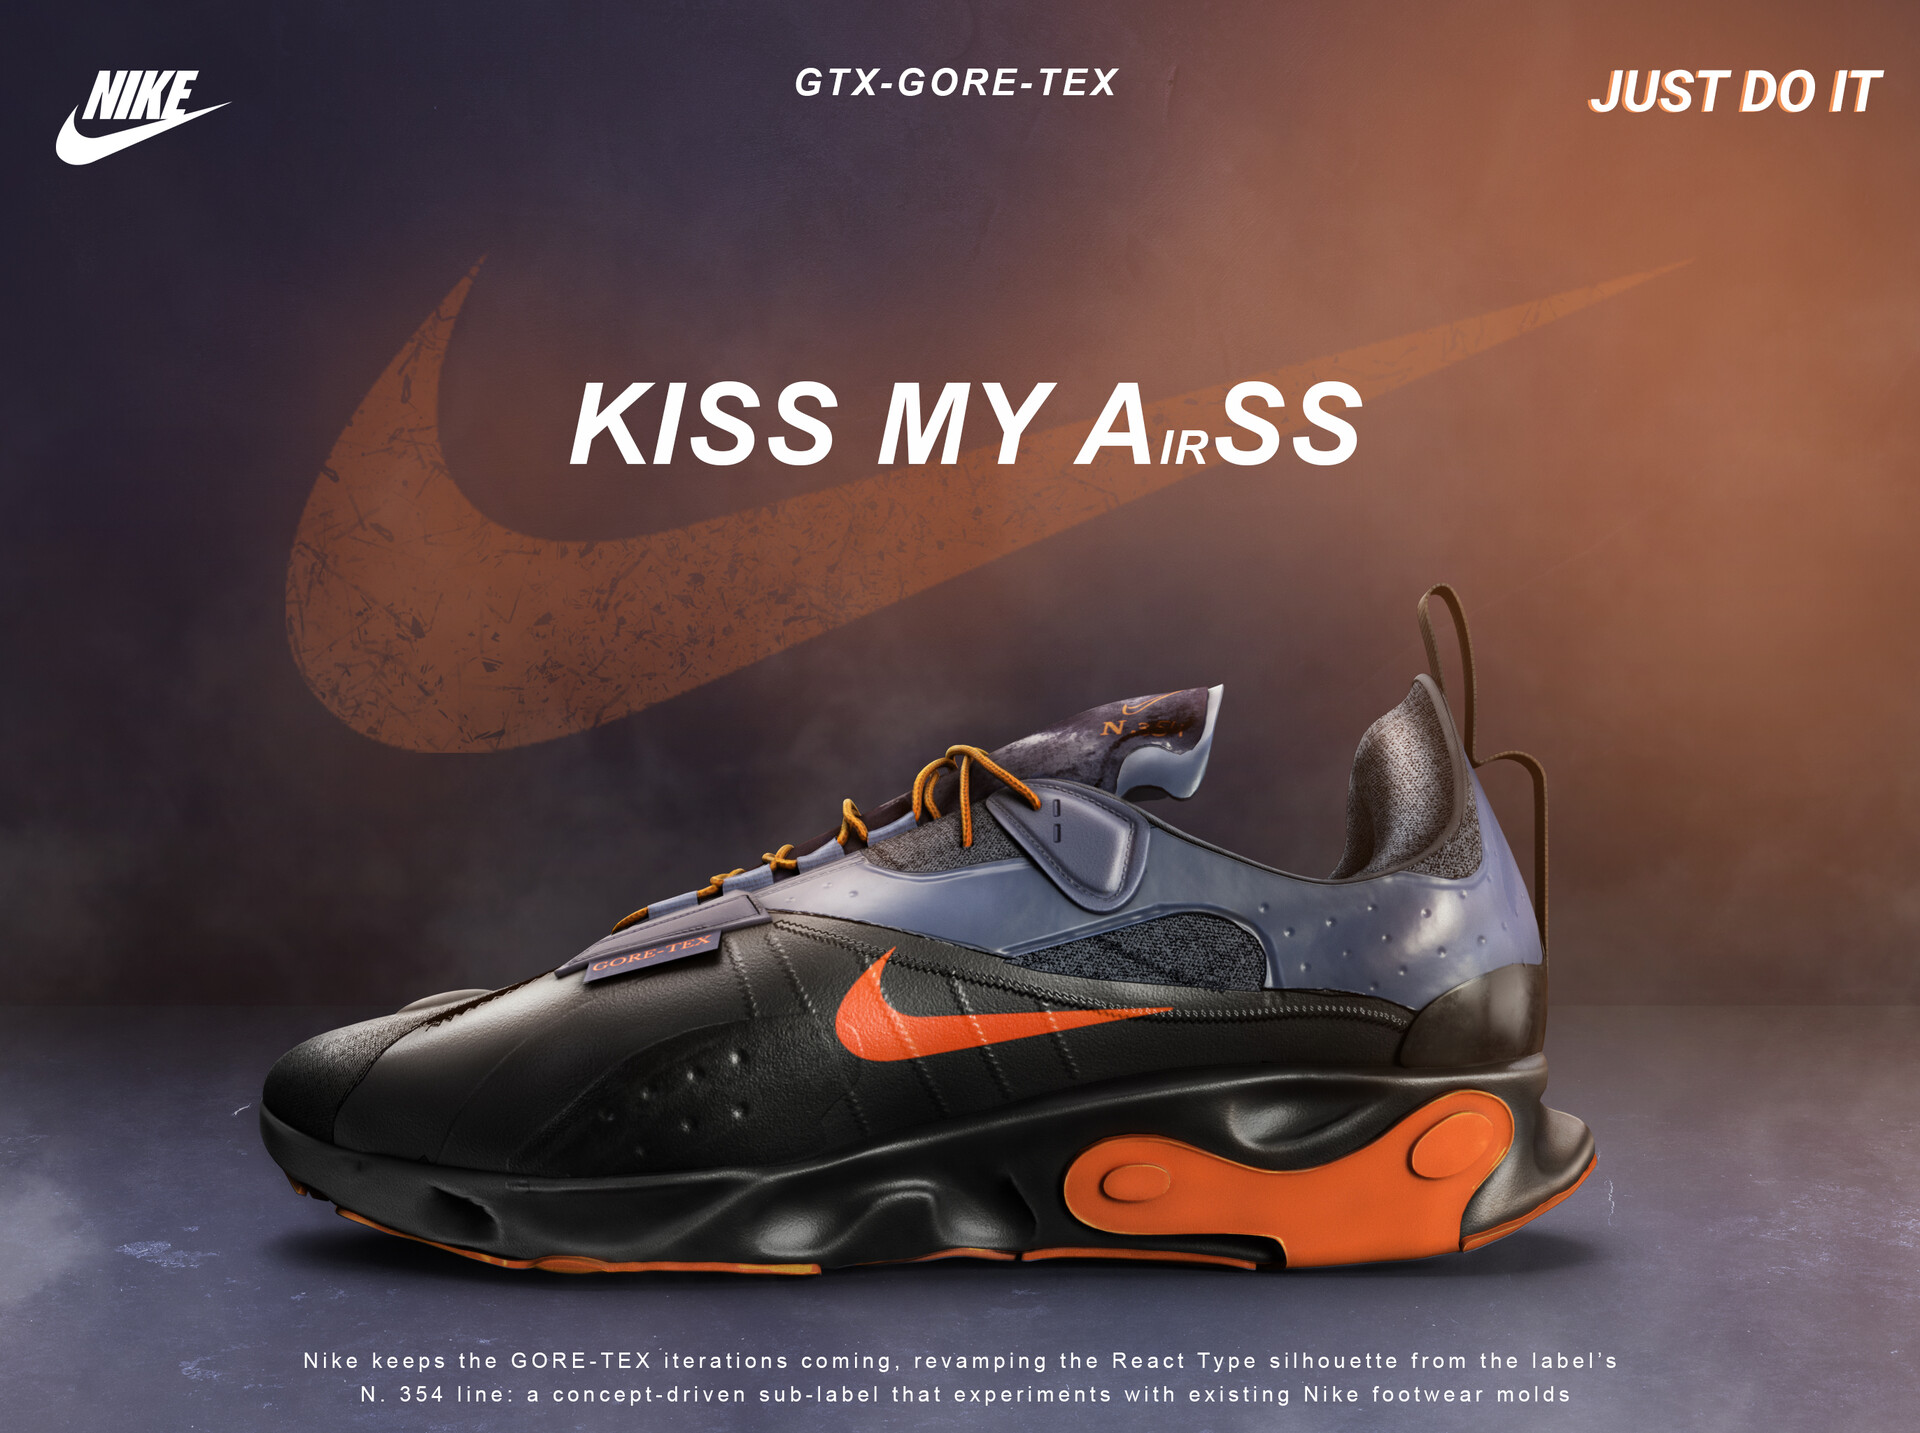 - Nike GTX-GORE-TEX Shoe